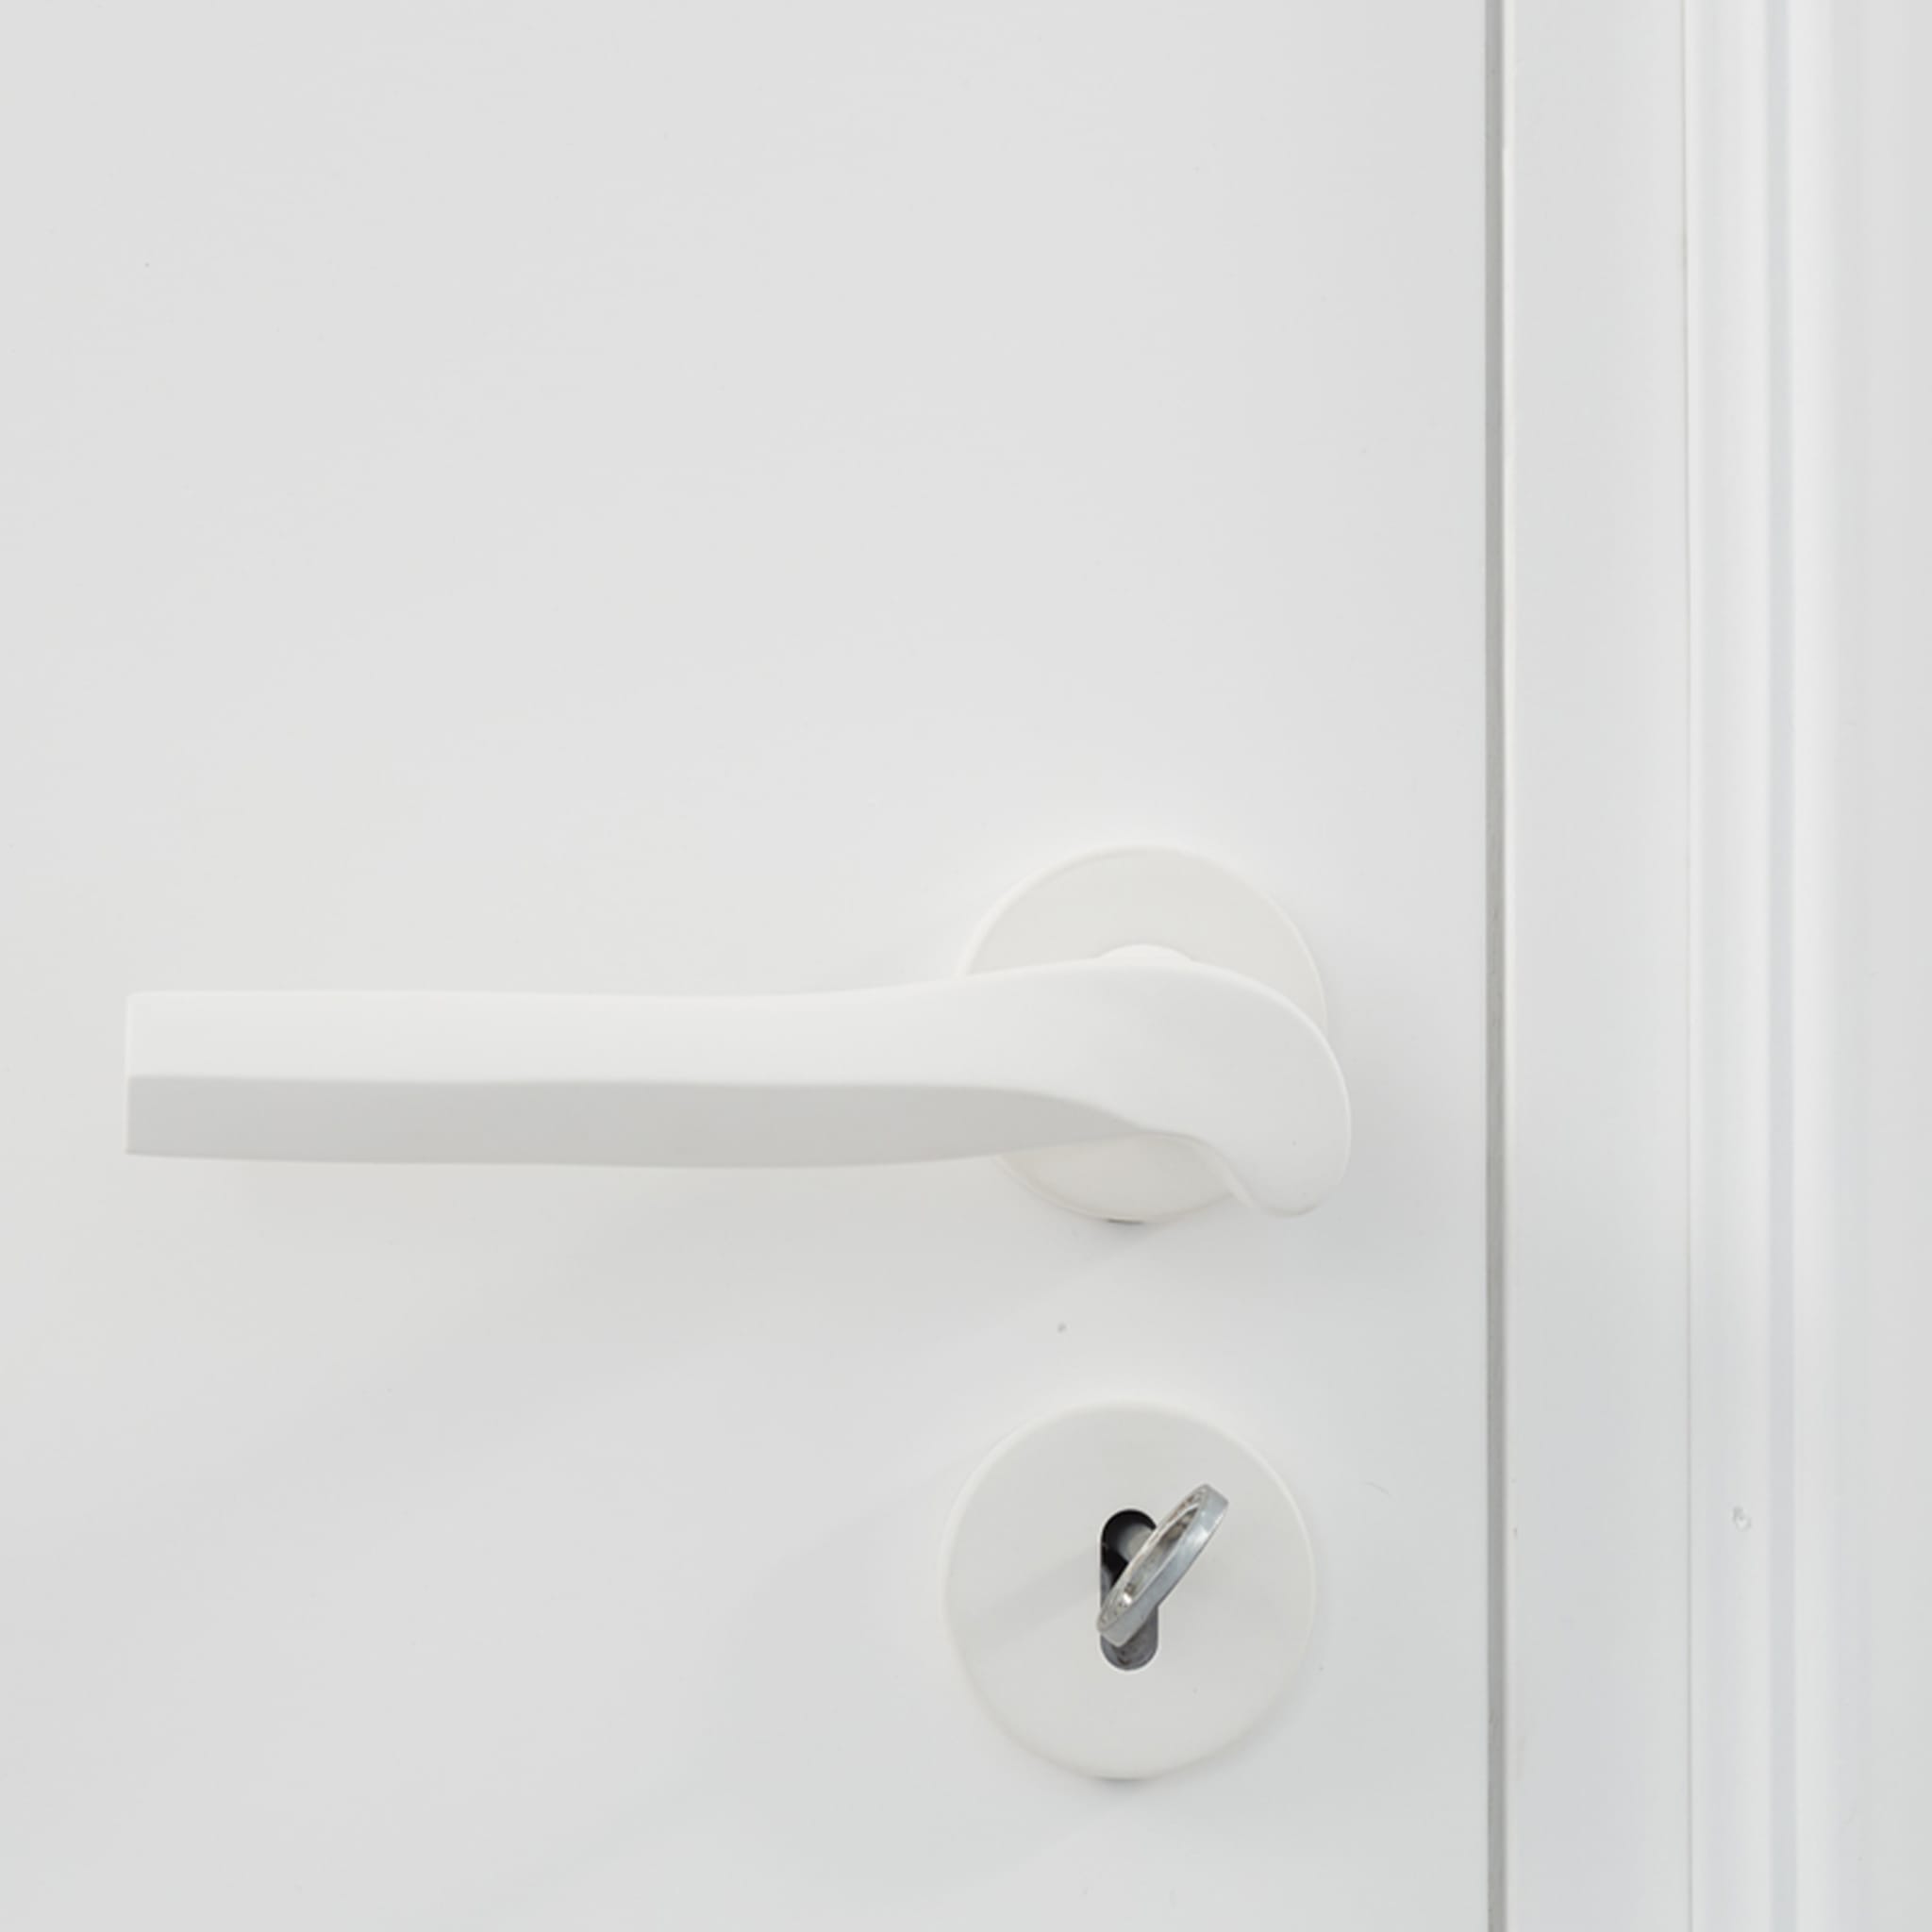 Prisma White Door Handle by Nicole Valenti - Alternative view 1